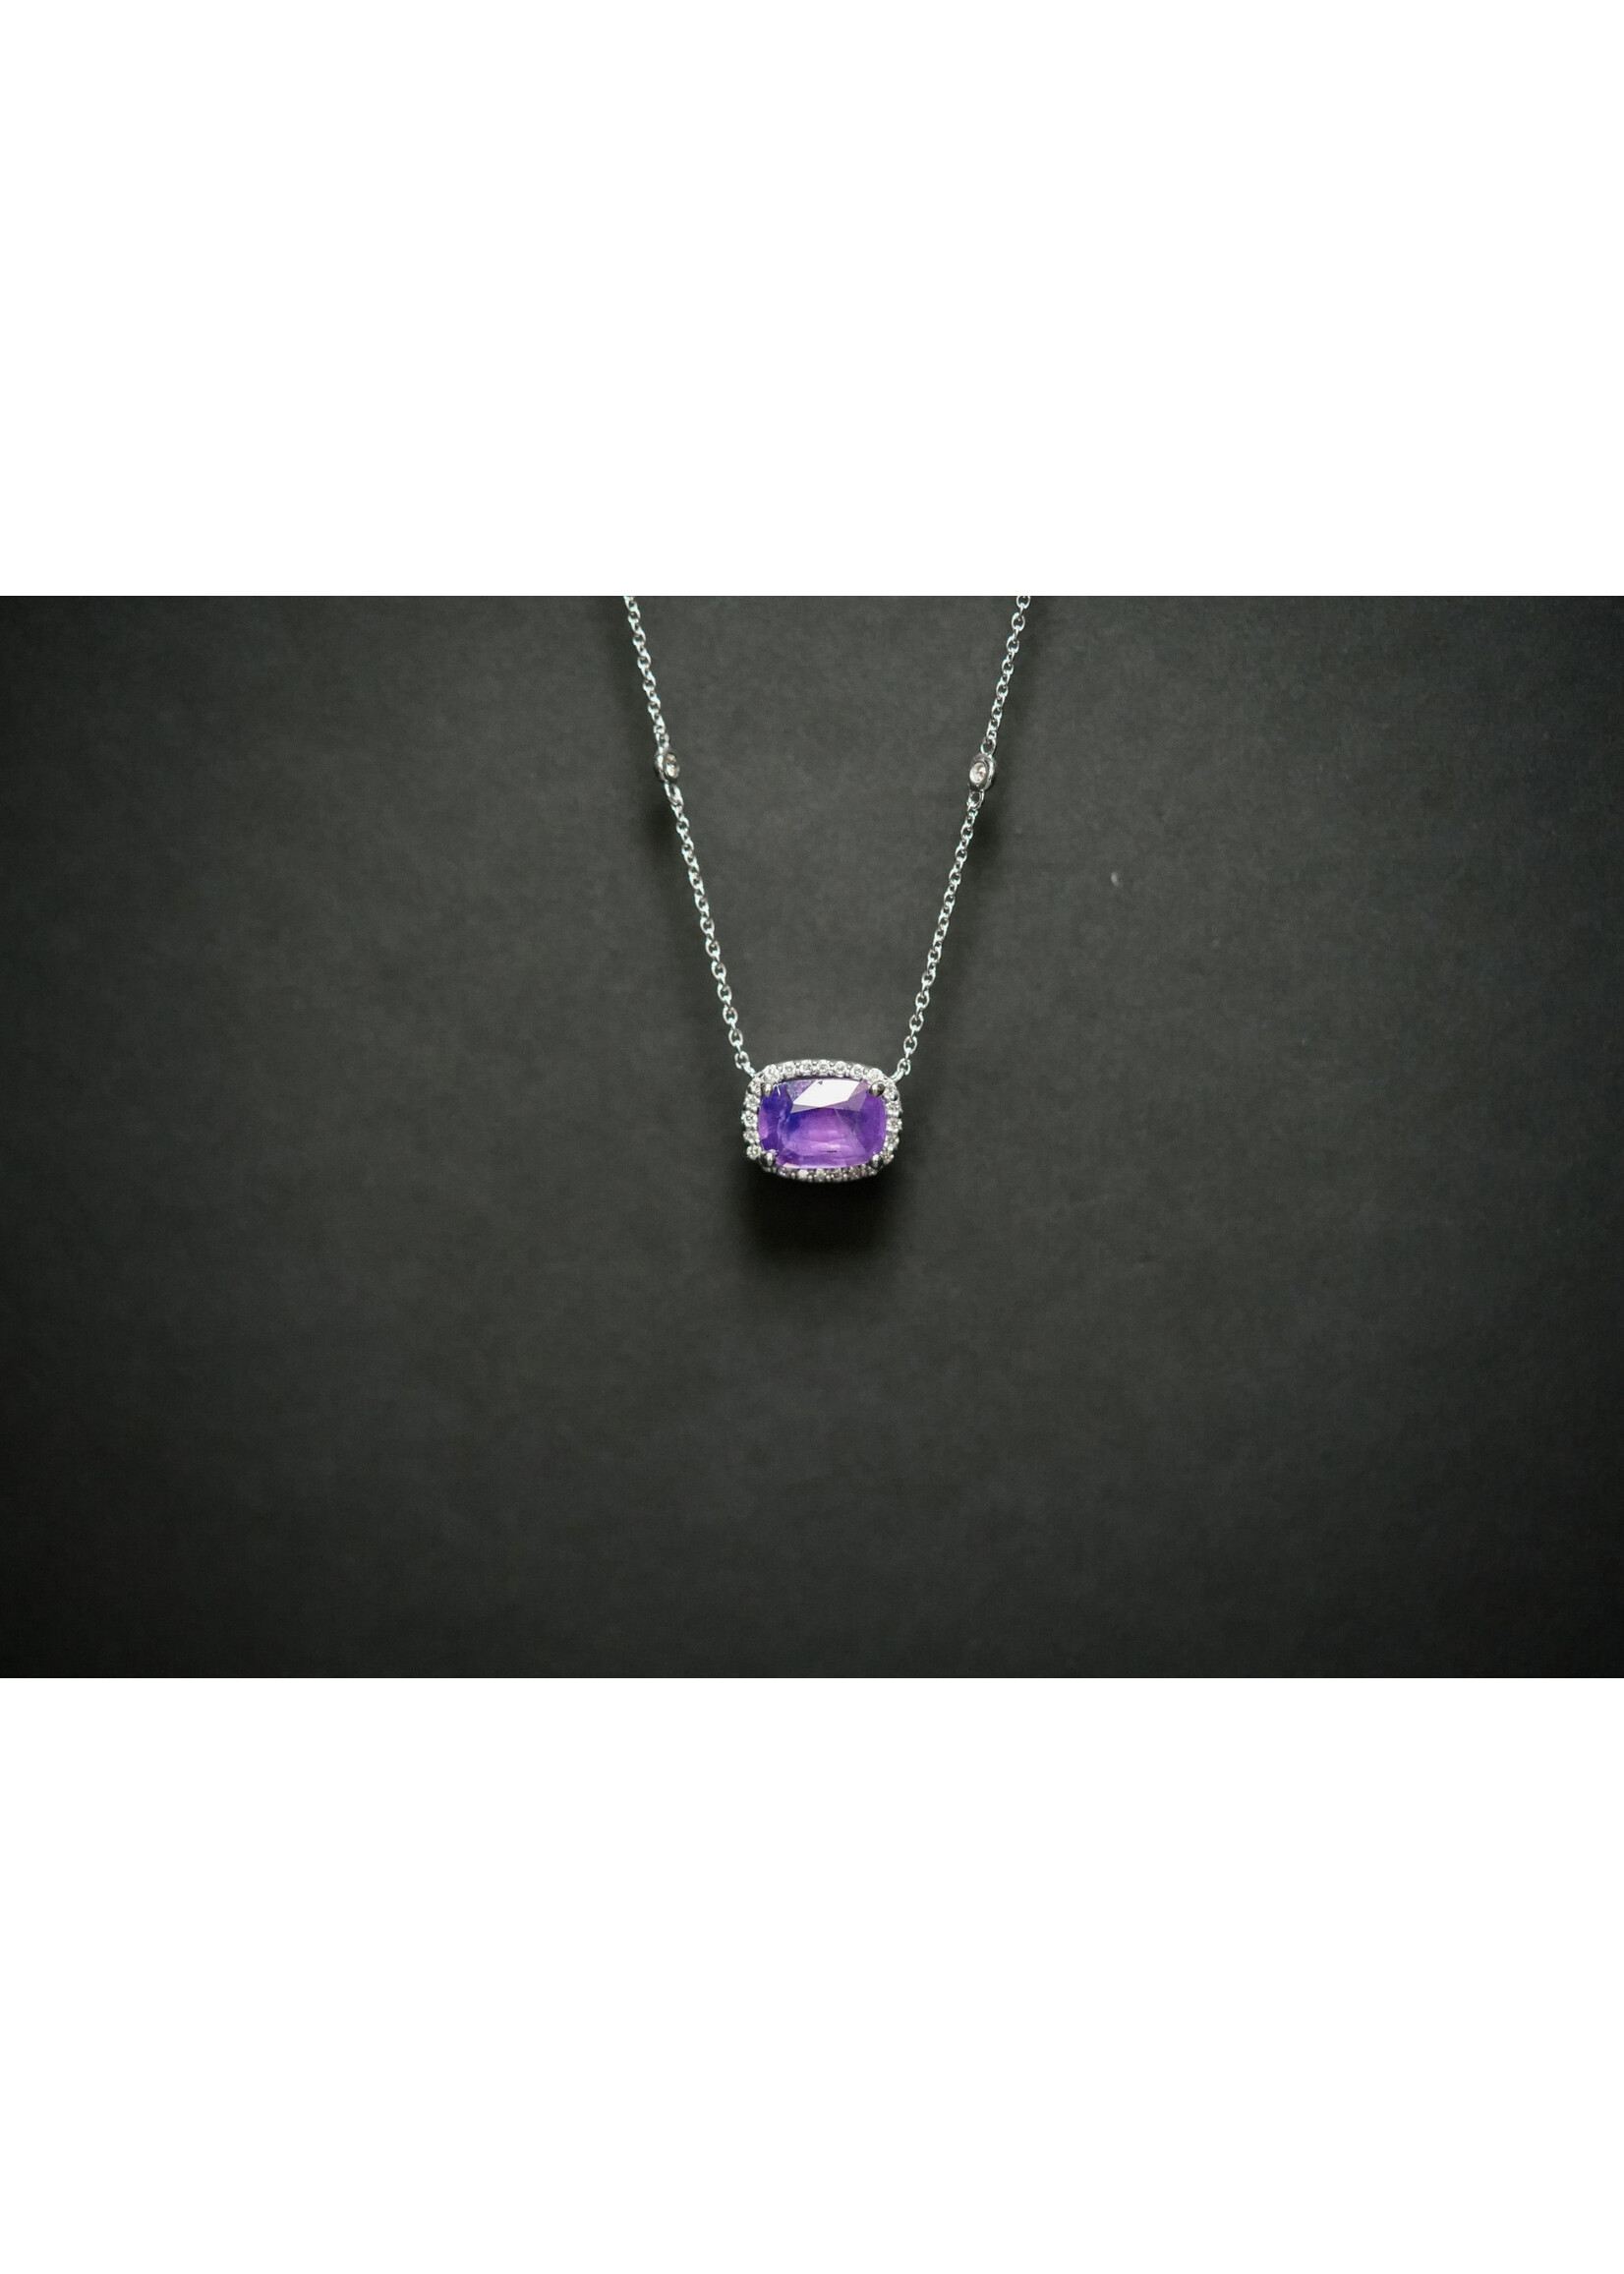 14KW 4.10g 2.60ctw (2.40ctr) Purple Sapphire & Diamond Halo Stationed Pendant 16-18"